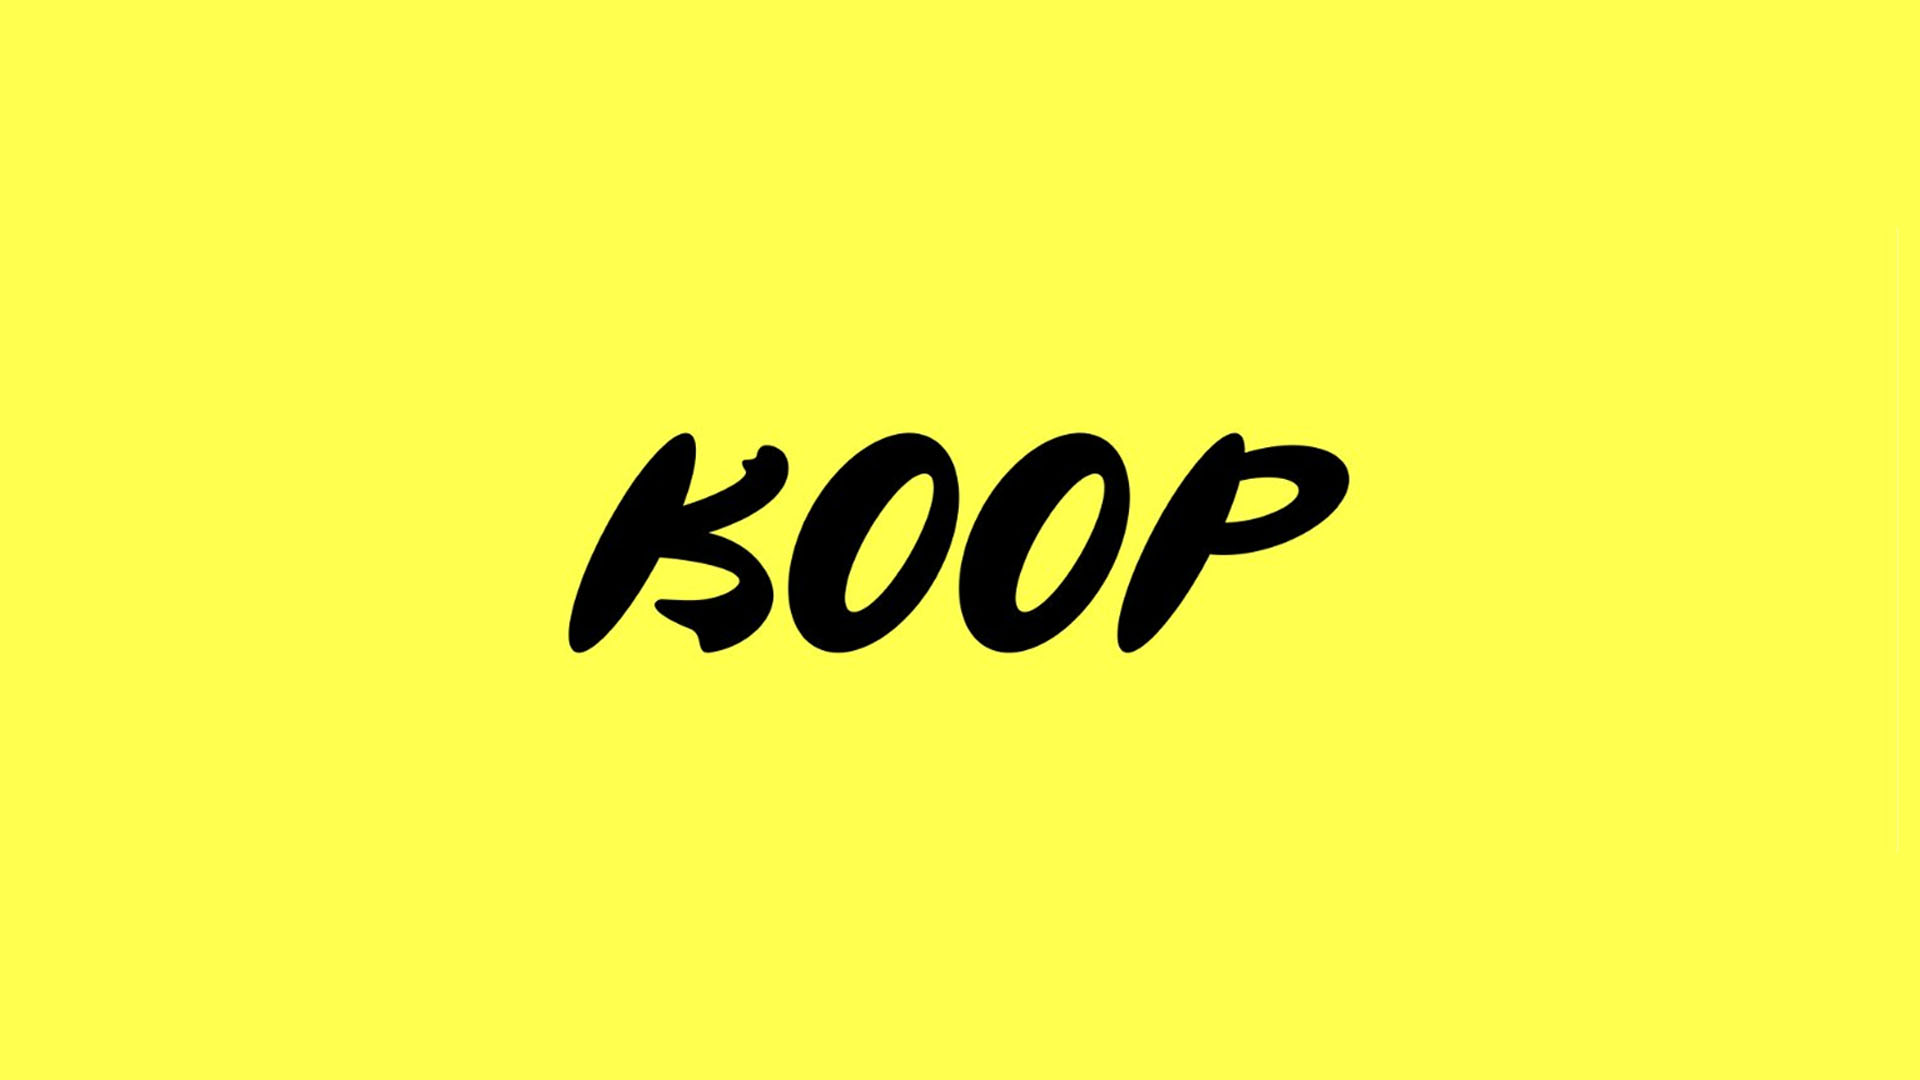 Koop raises $5 million to enable communities to raise funds